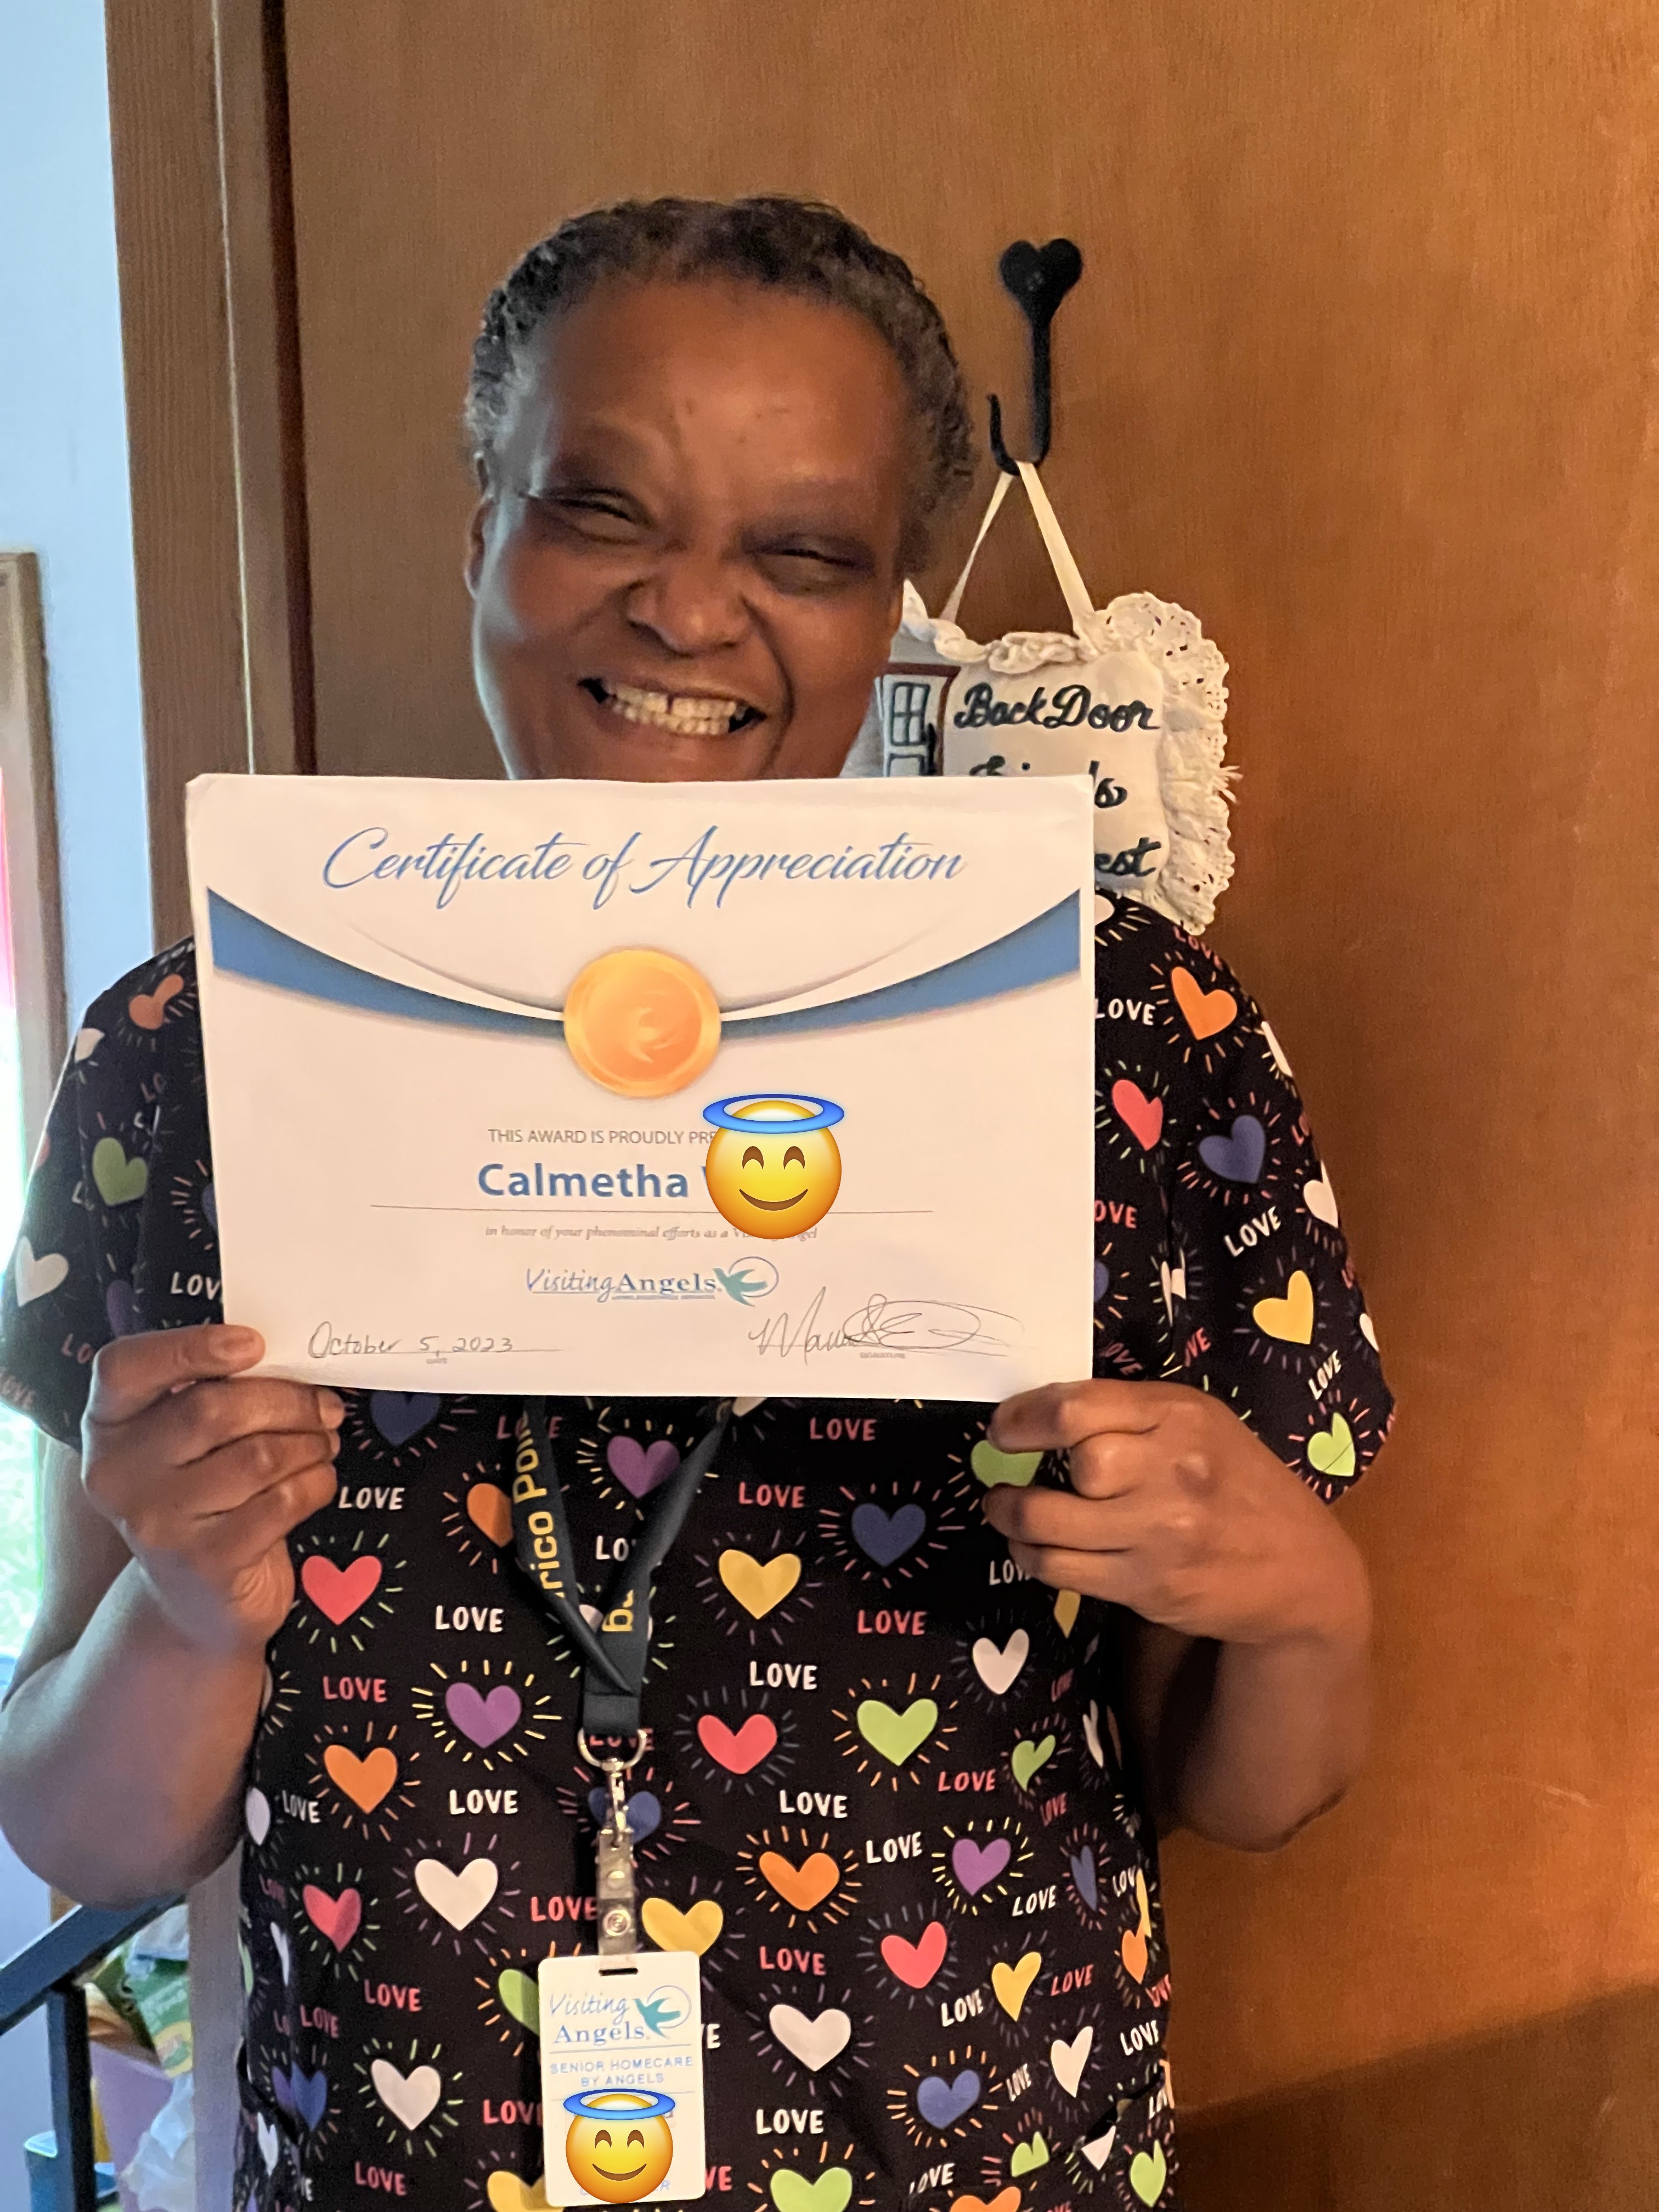 Caregiver holding certificate